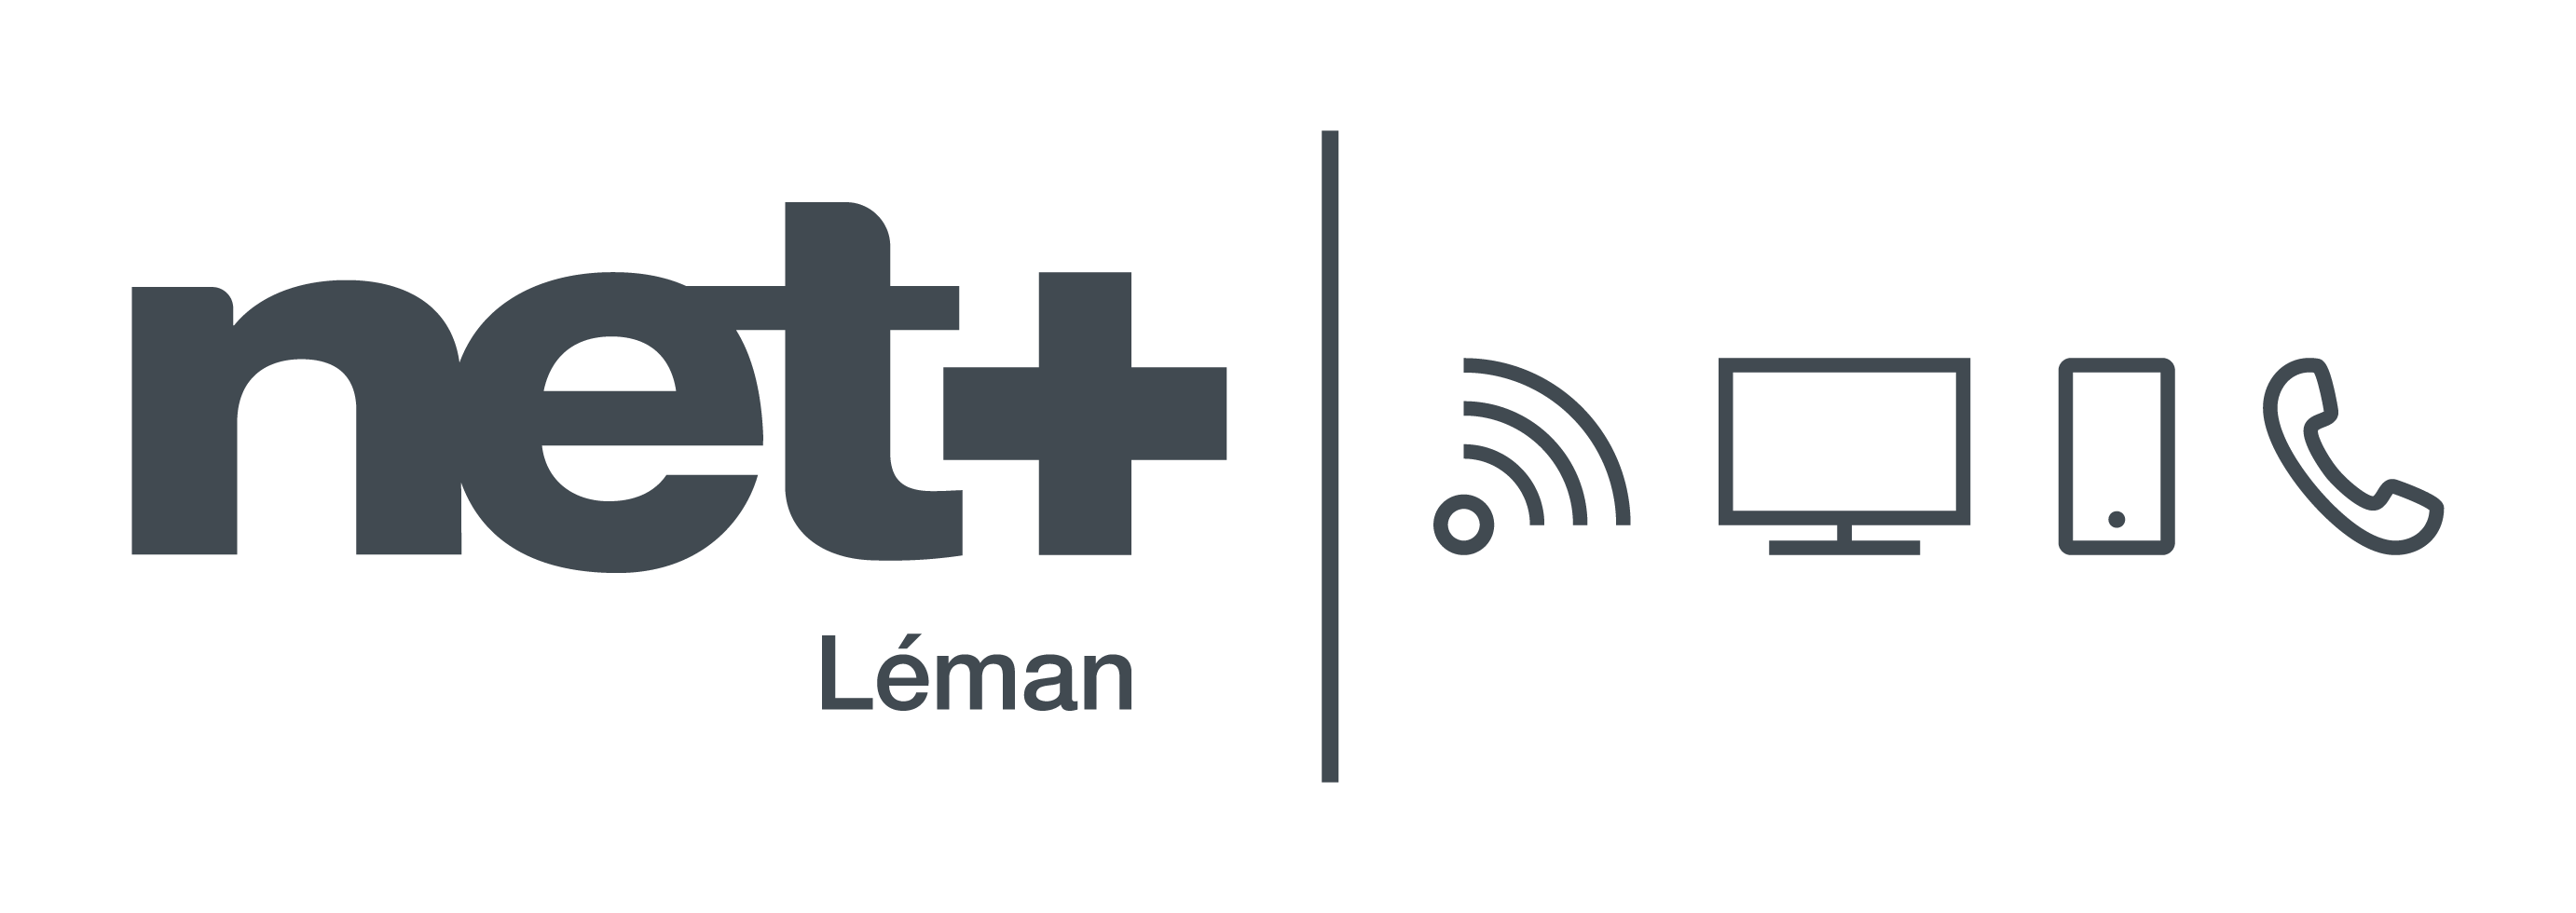 Logo netLeman fond transparent